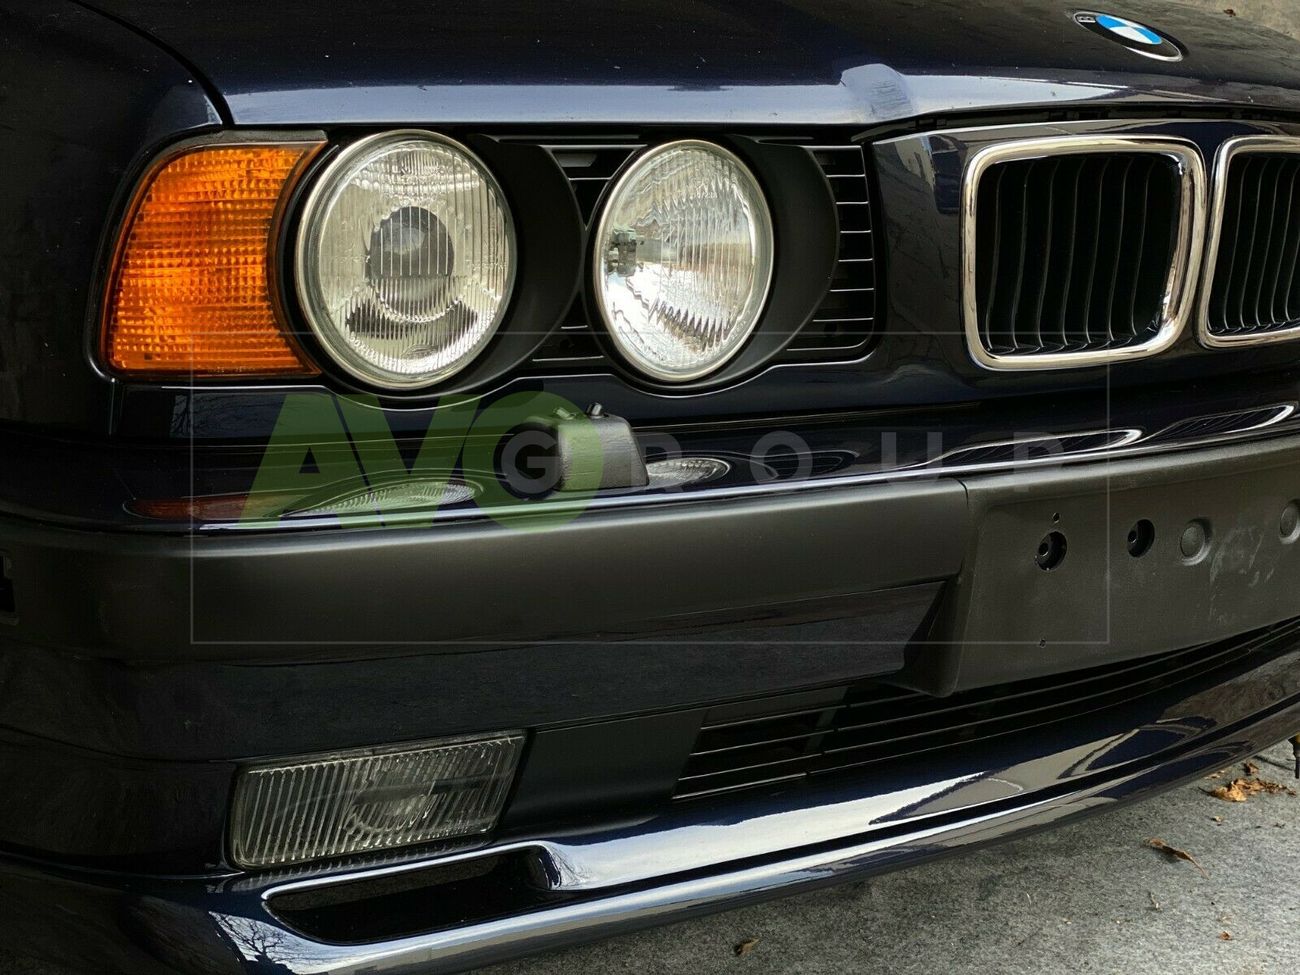 Front Spoiler Splitter m tech style for BMW 5 E34 1986-1997 ABS